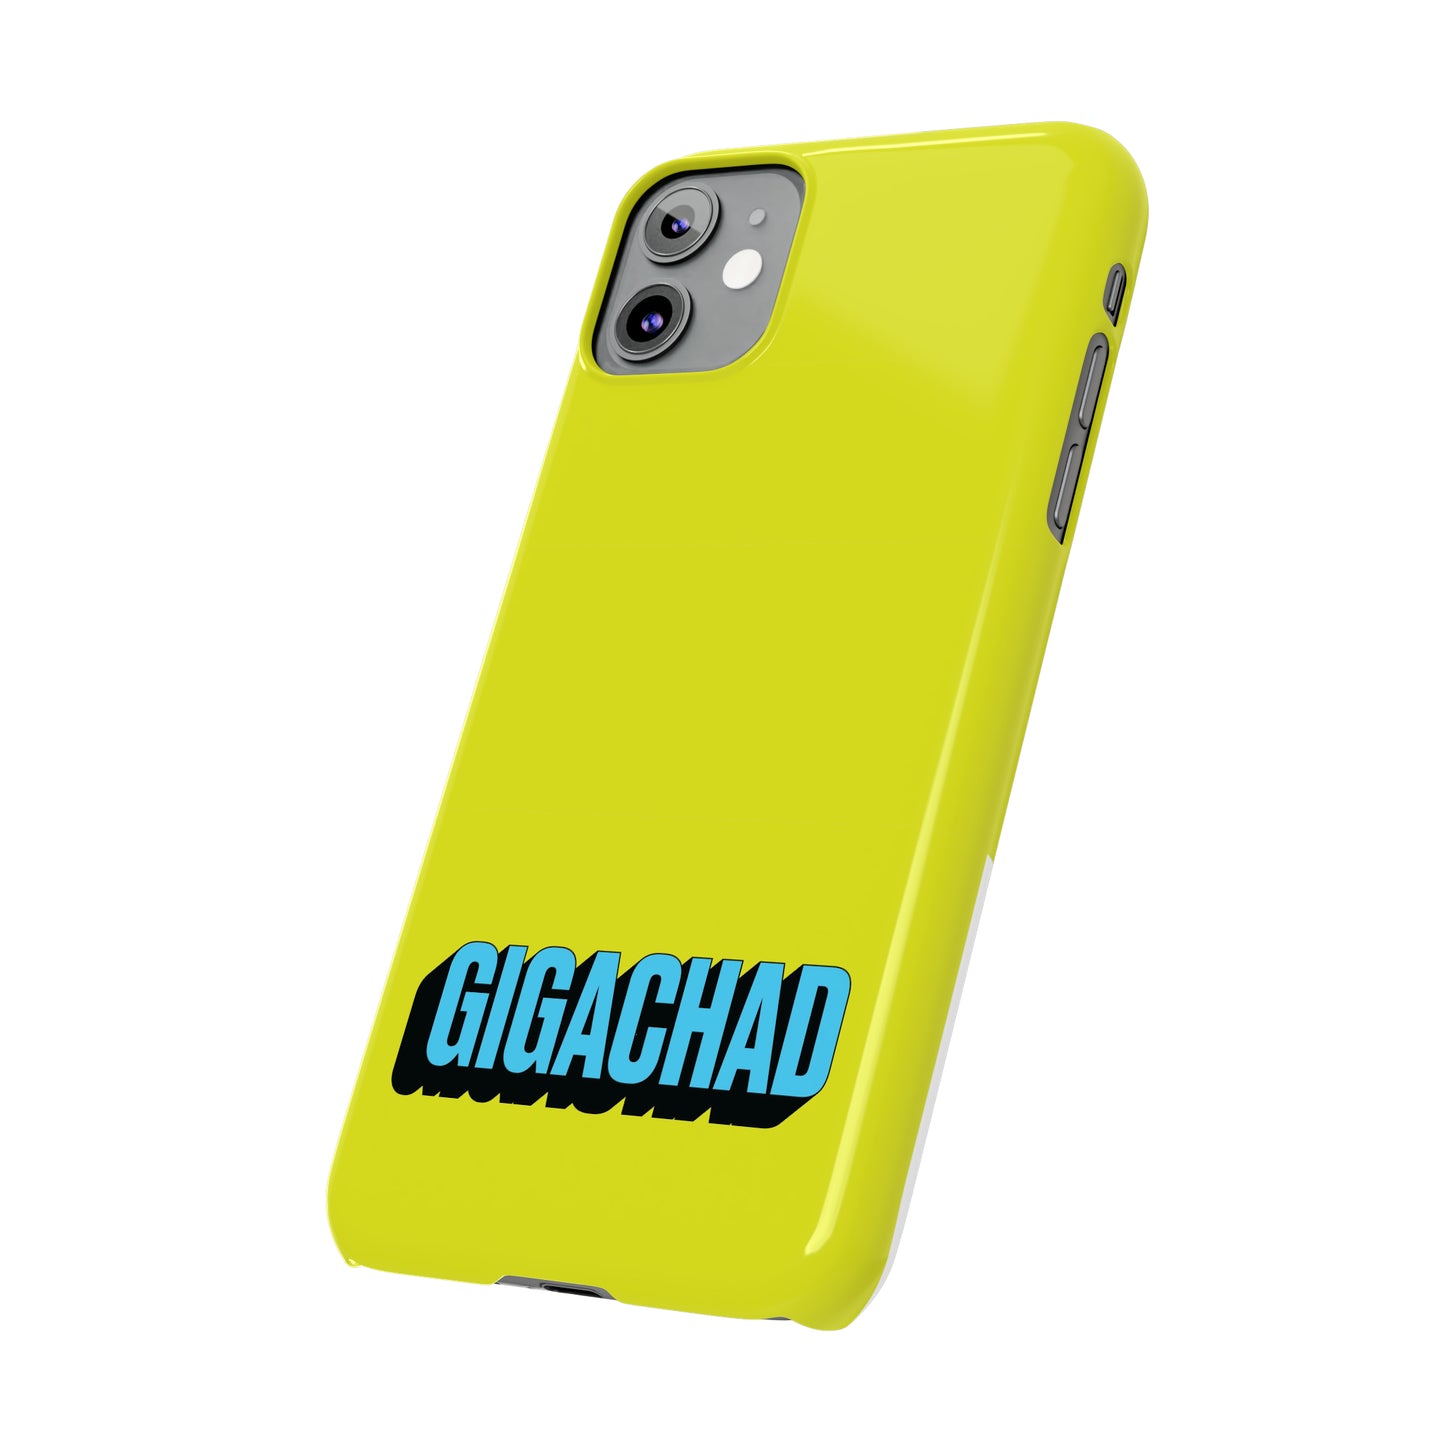 Gigachad | SYCU | Phone Cases